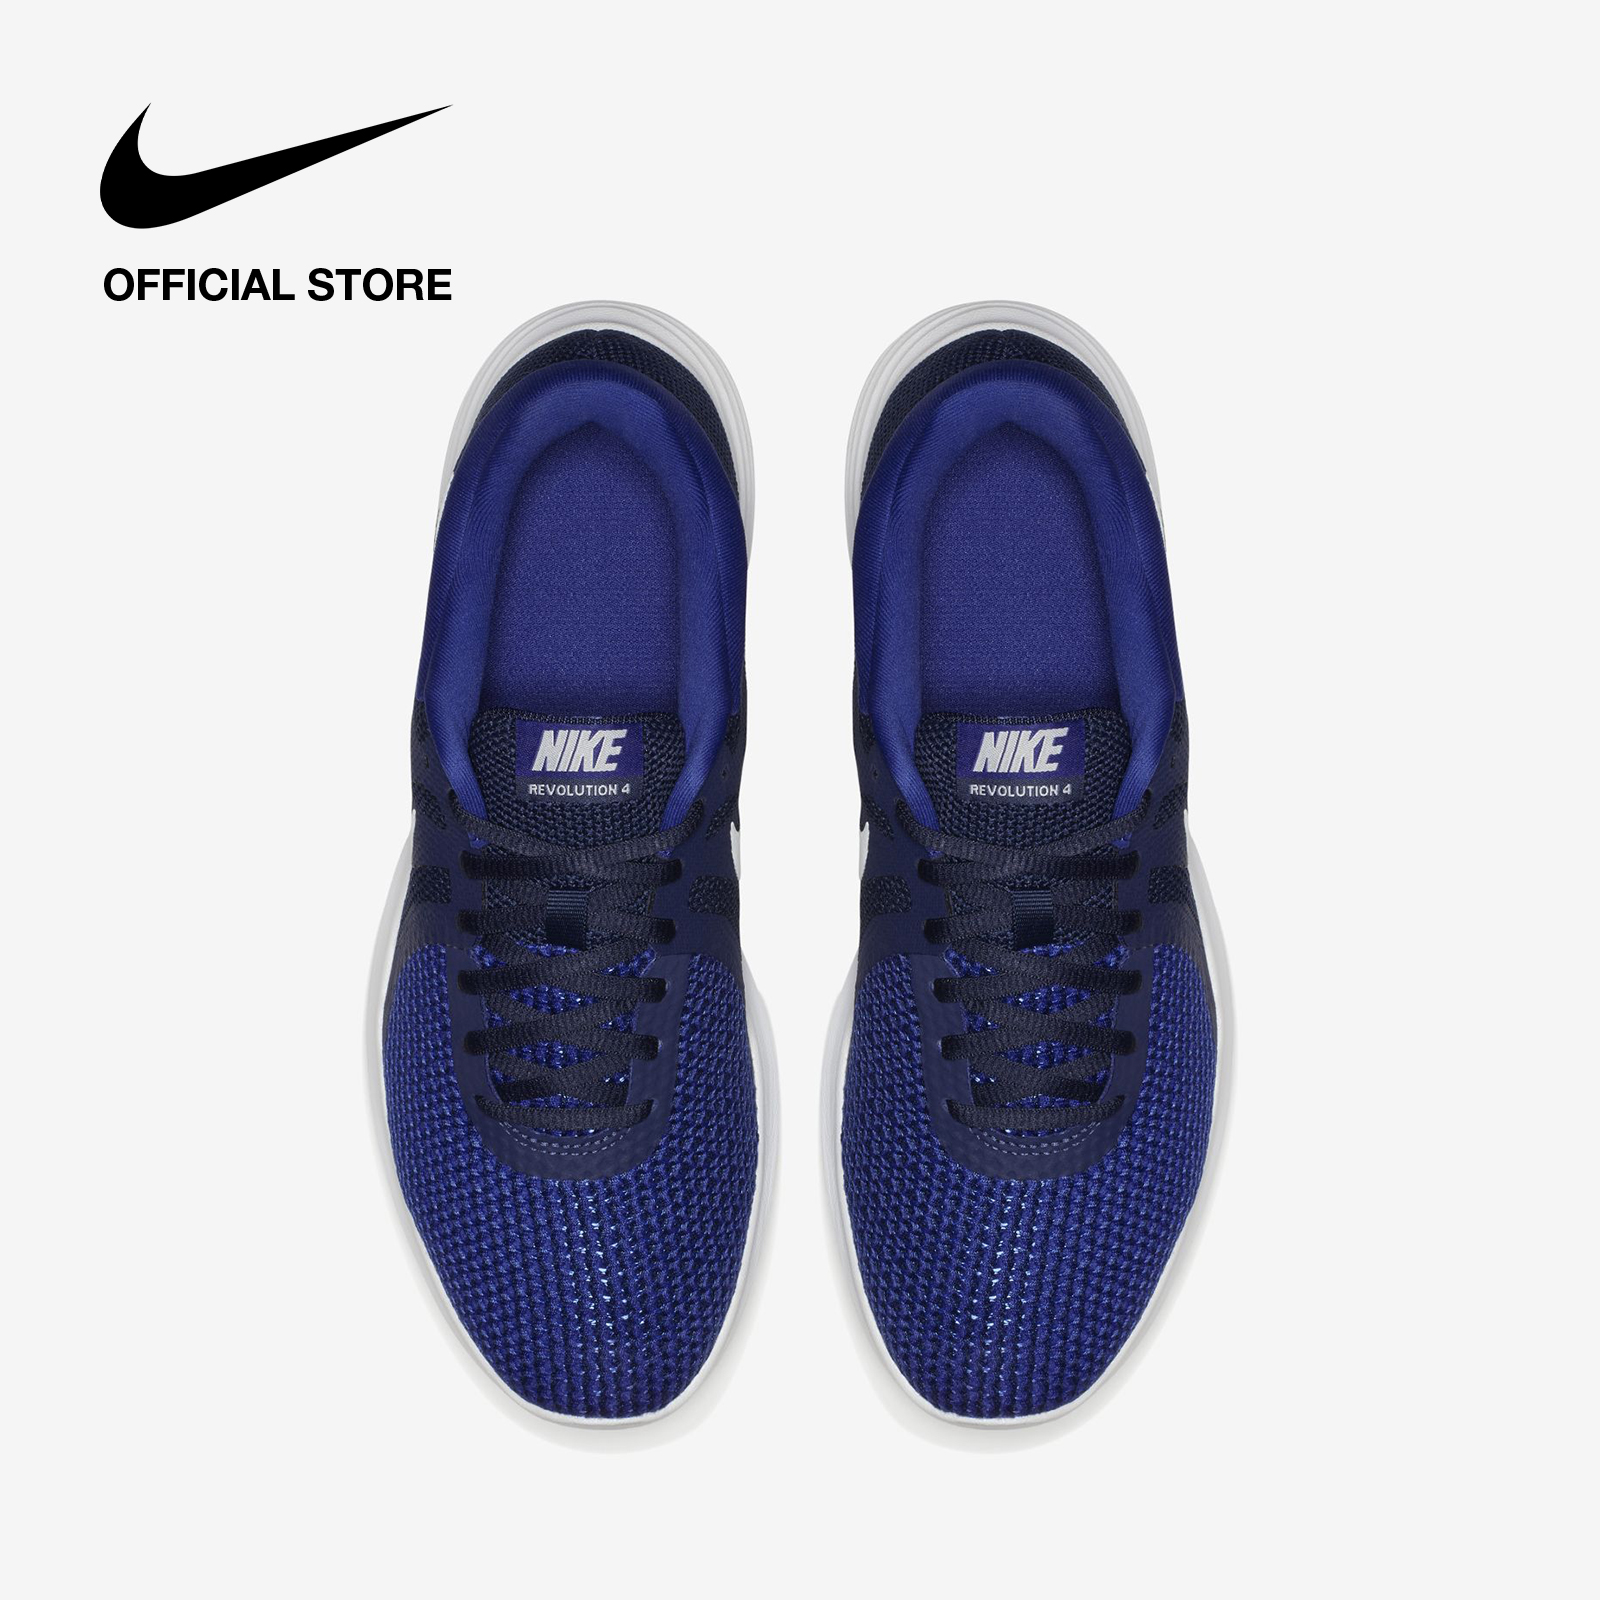 Nike Men's Revolution 4 Shoes - Midnight Navy รองเท้าผู้ชาย Nike Revolution 4 - สีมิดไนท์นาวี